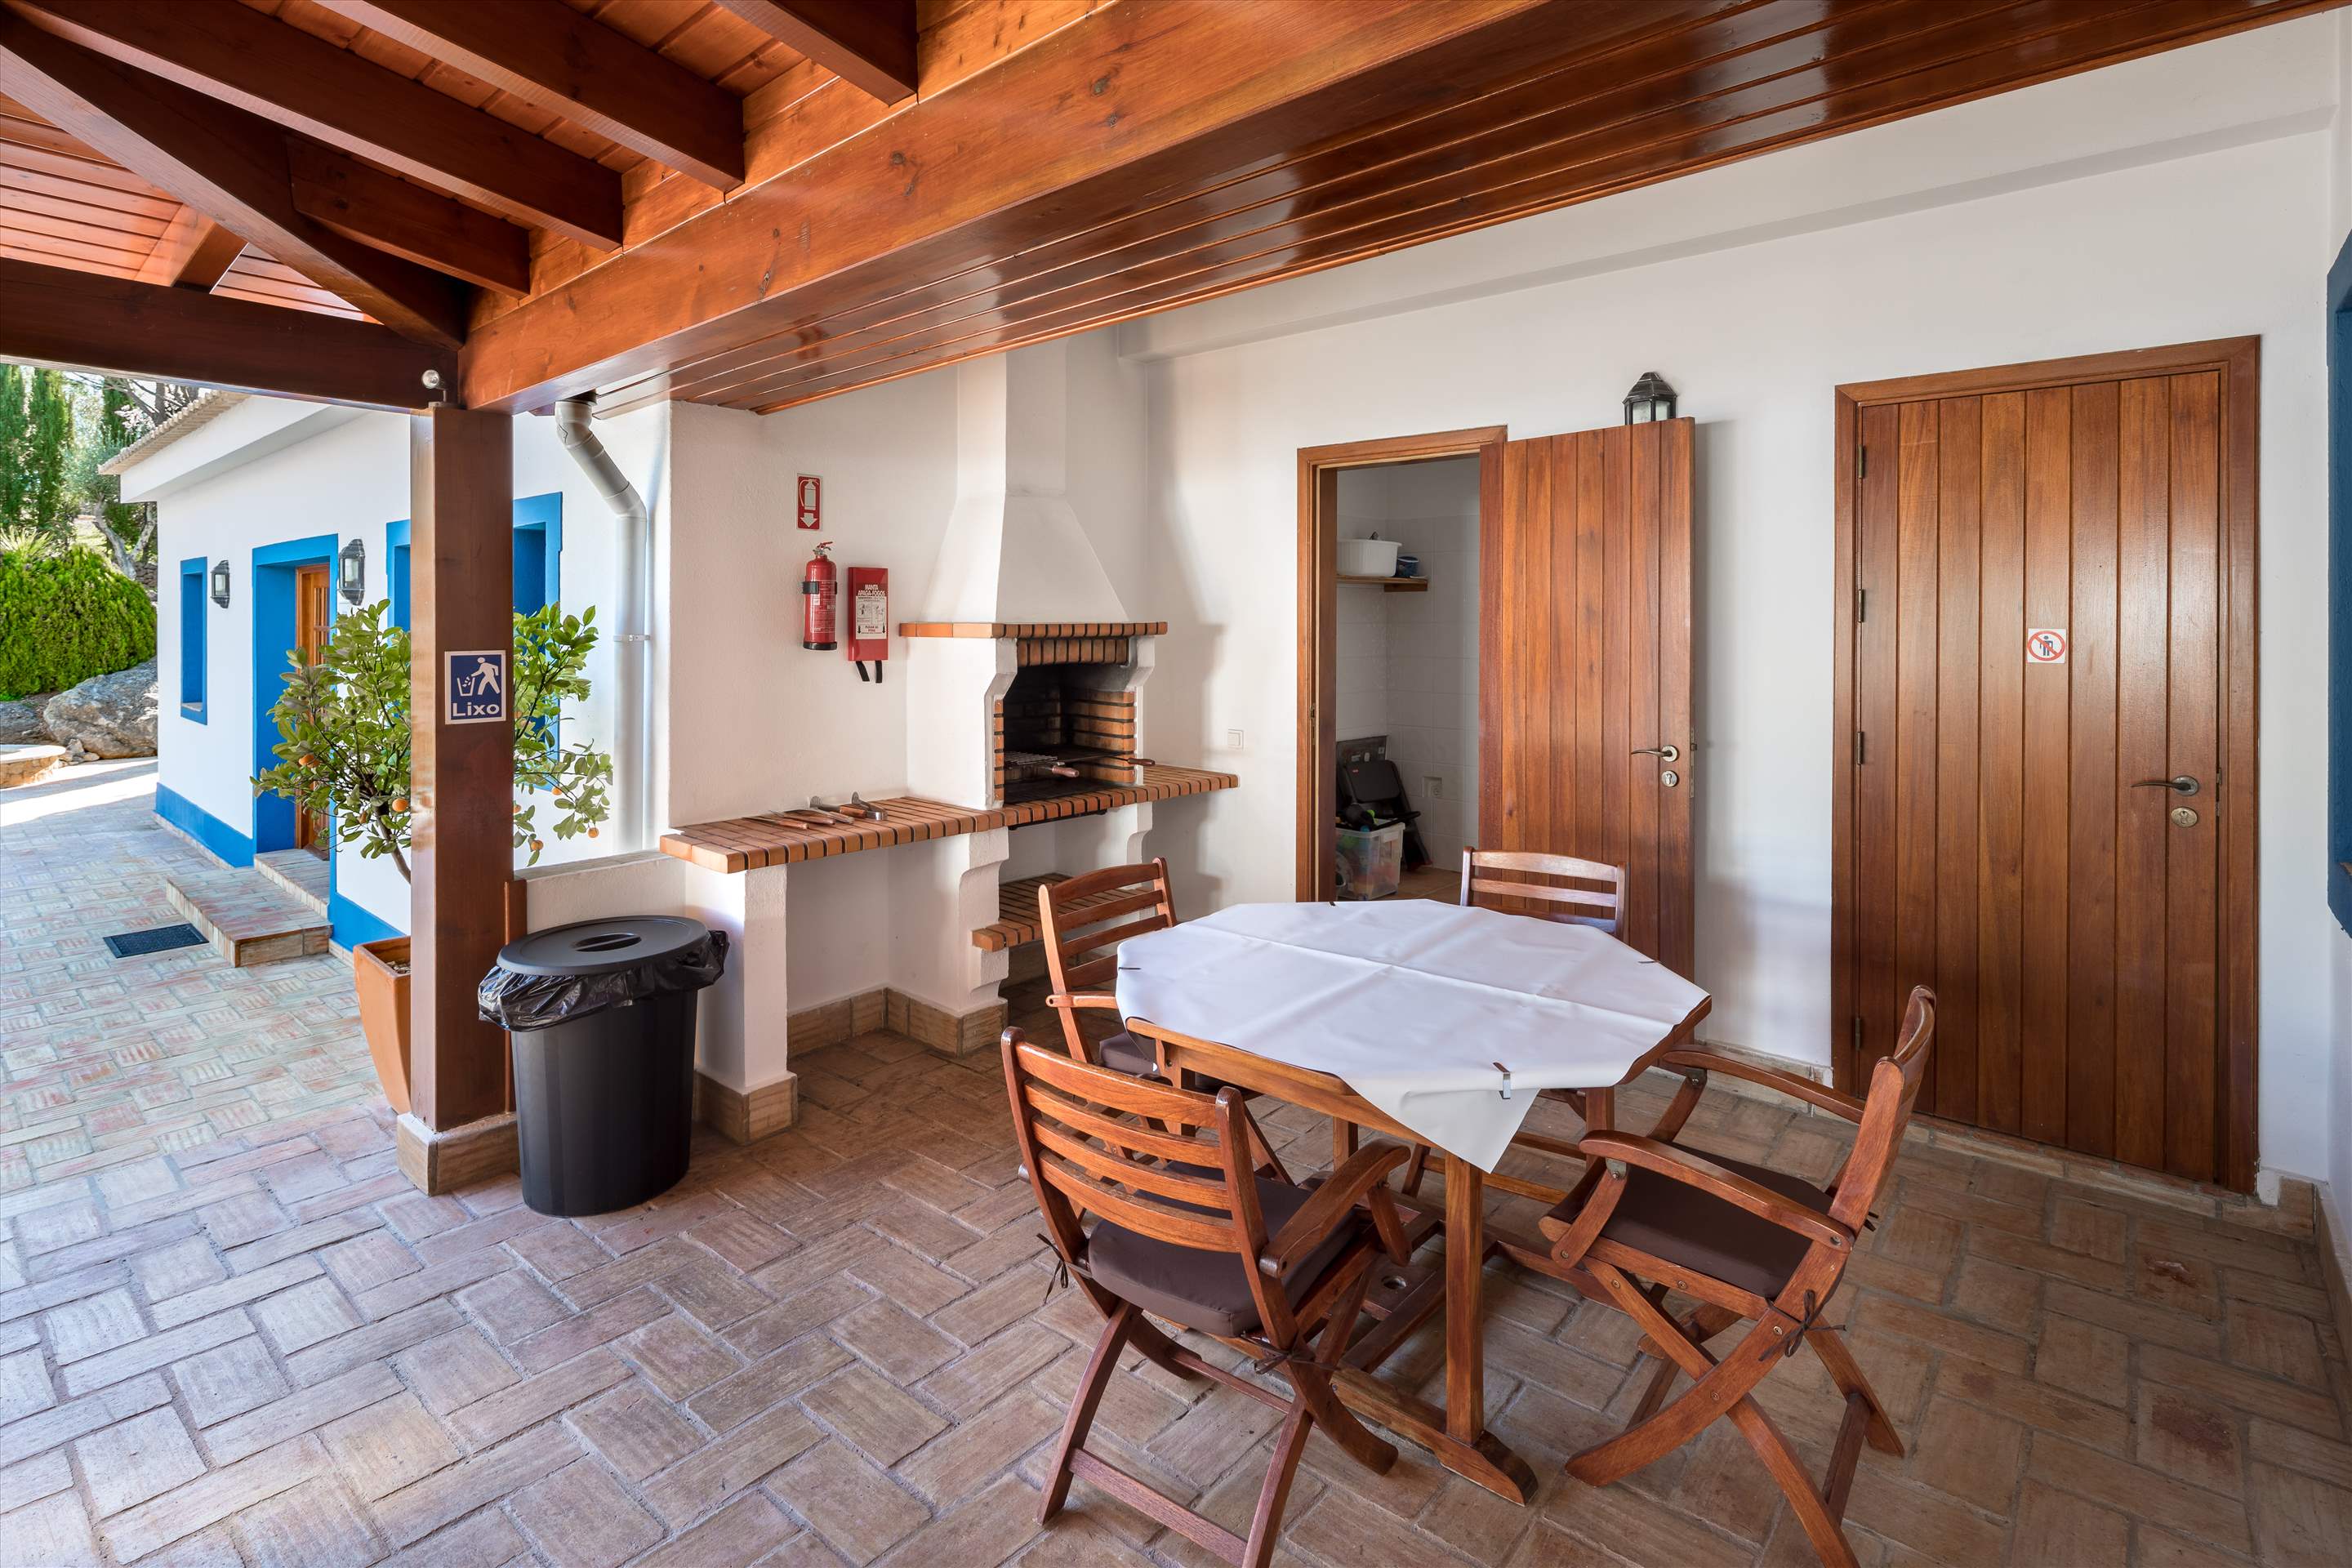 Casa do Ingles, up to 6 persons, 3 bedroom villa in Vilamoura Area, Algarve Photo #9